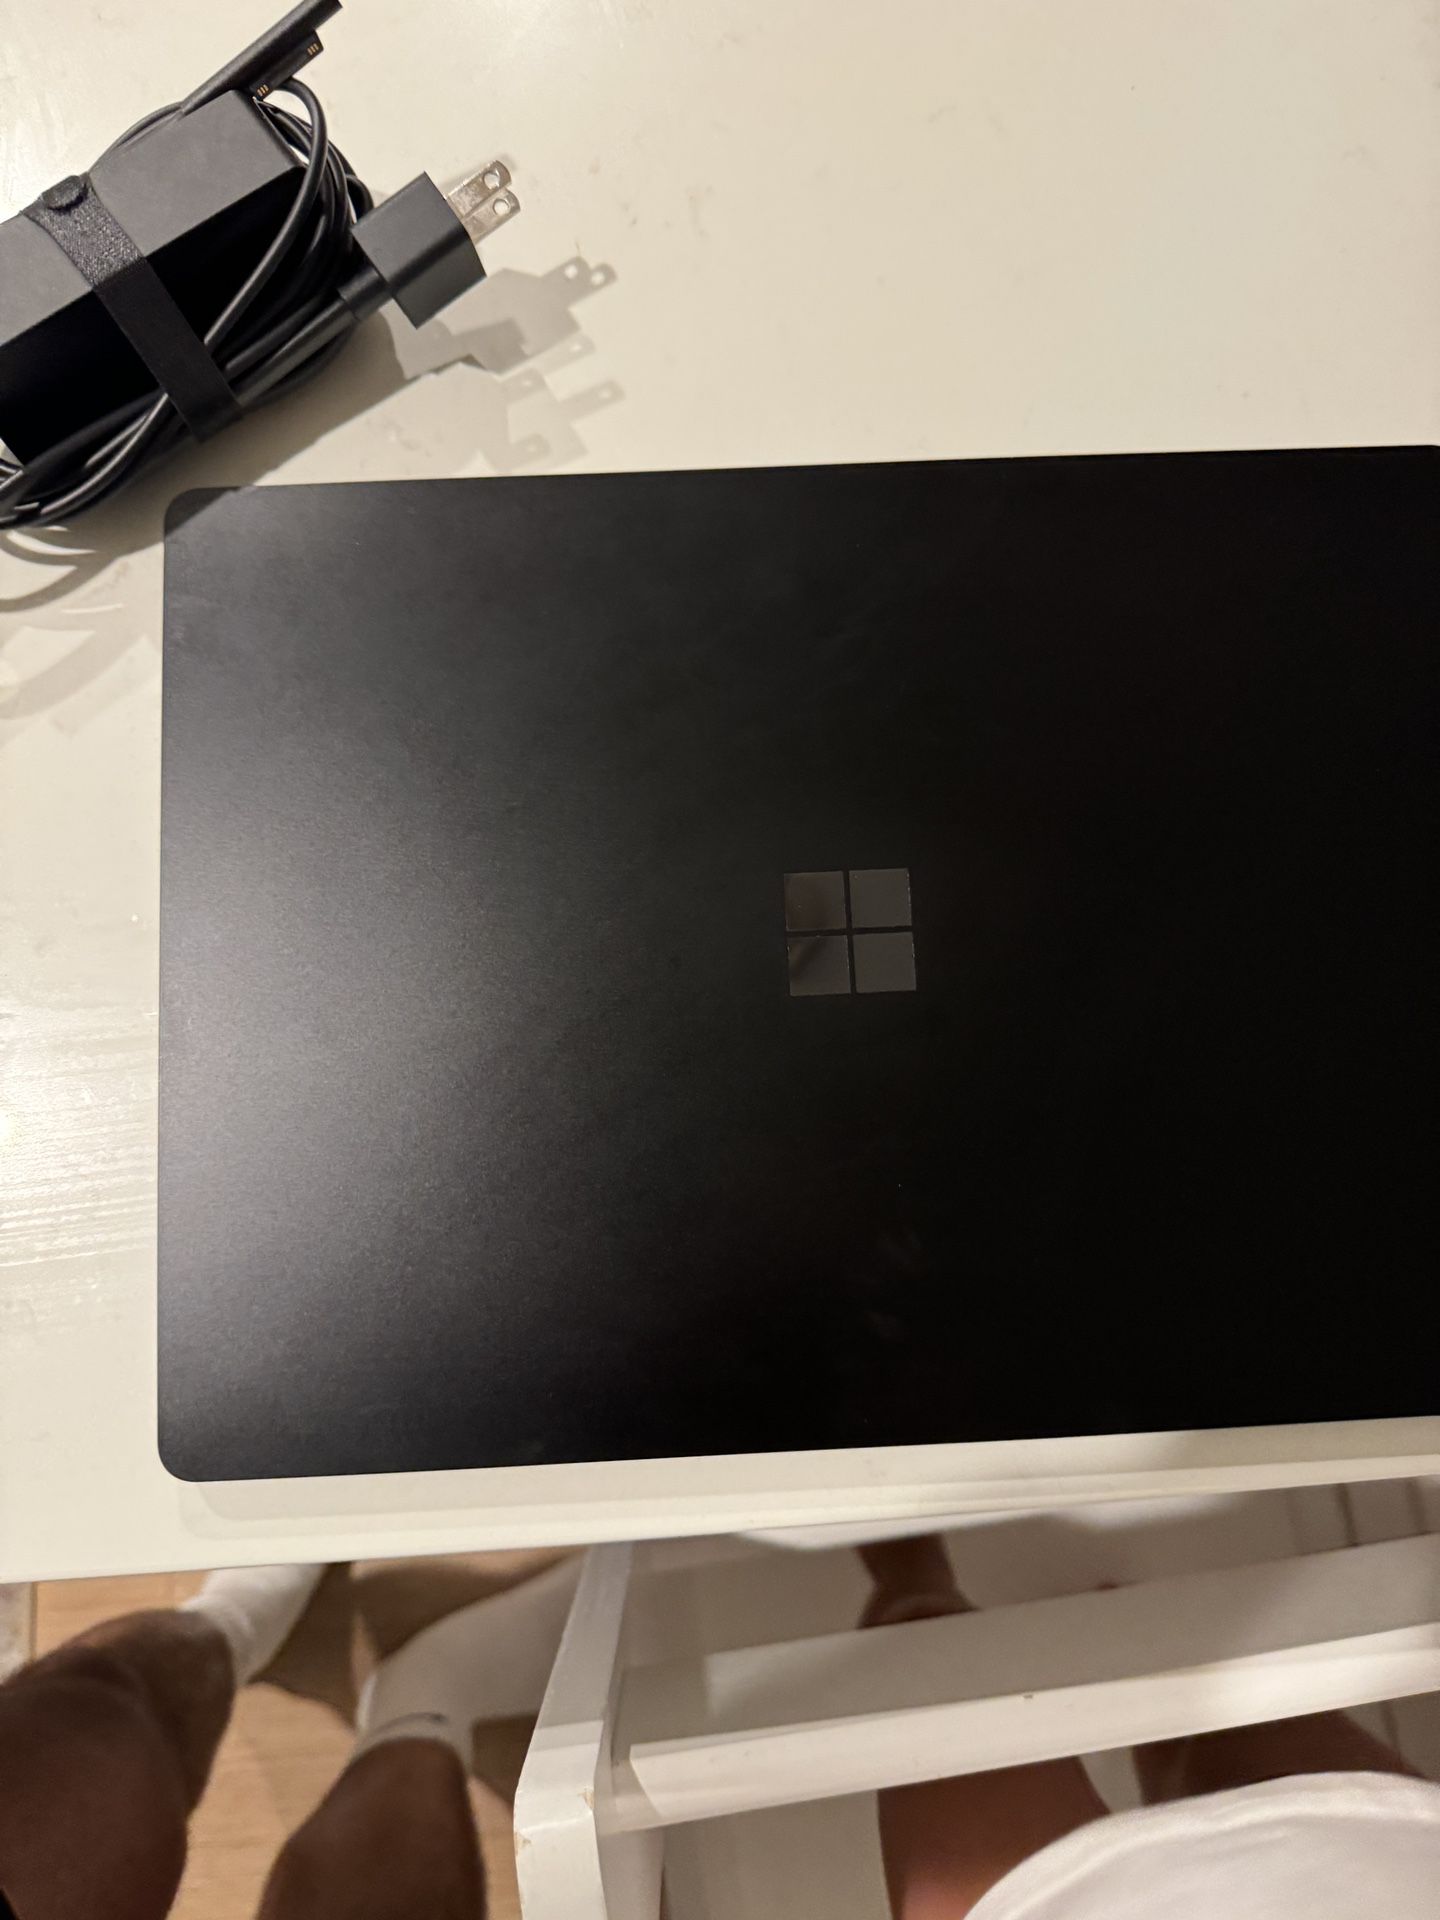 New Microsoft Surface 